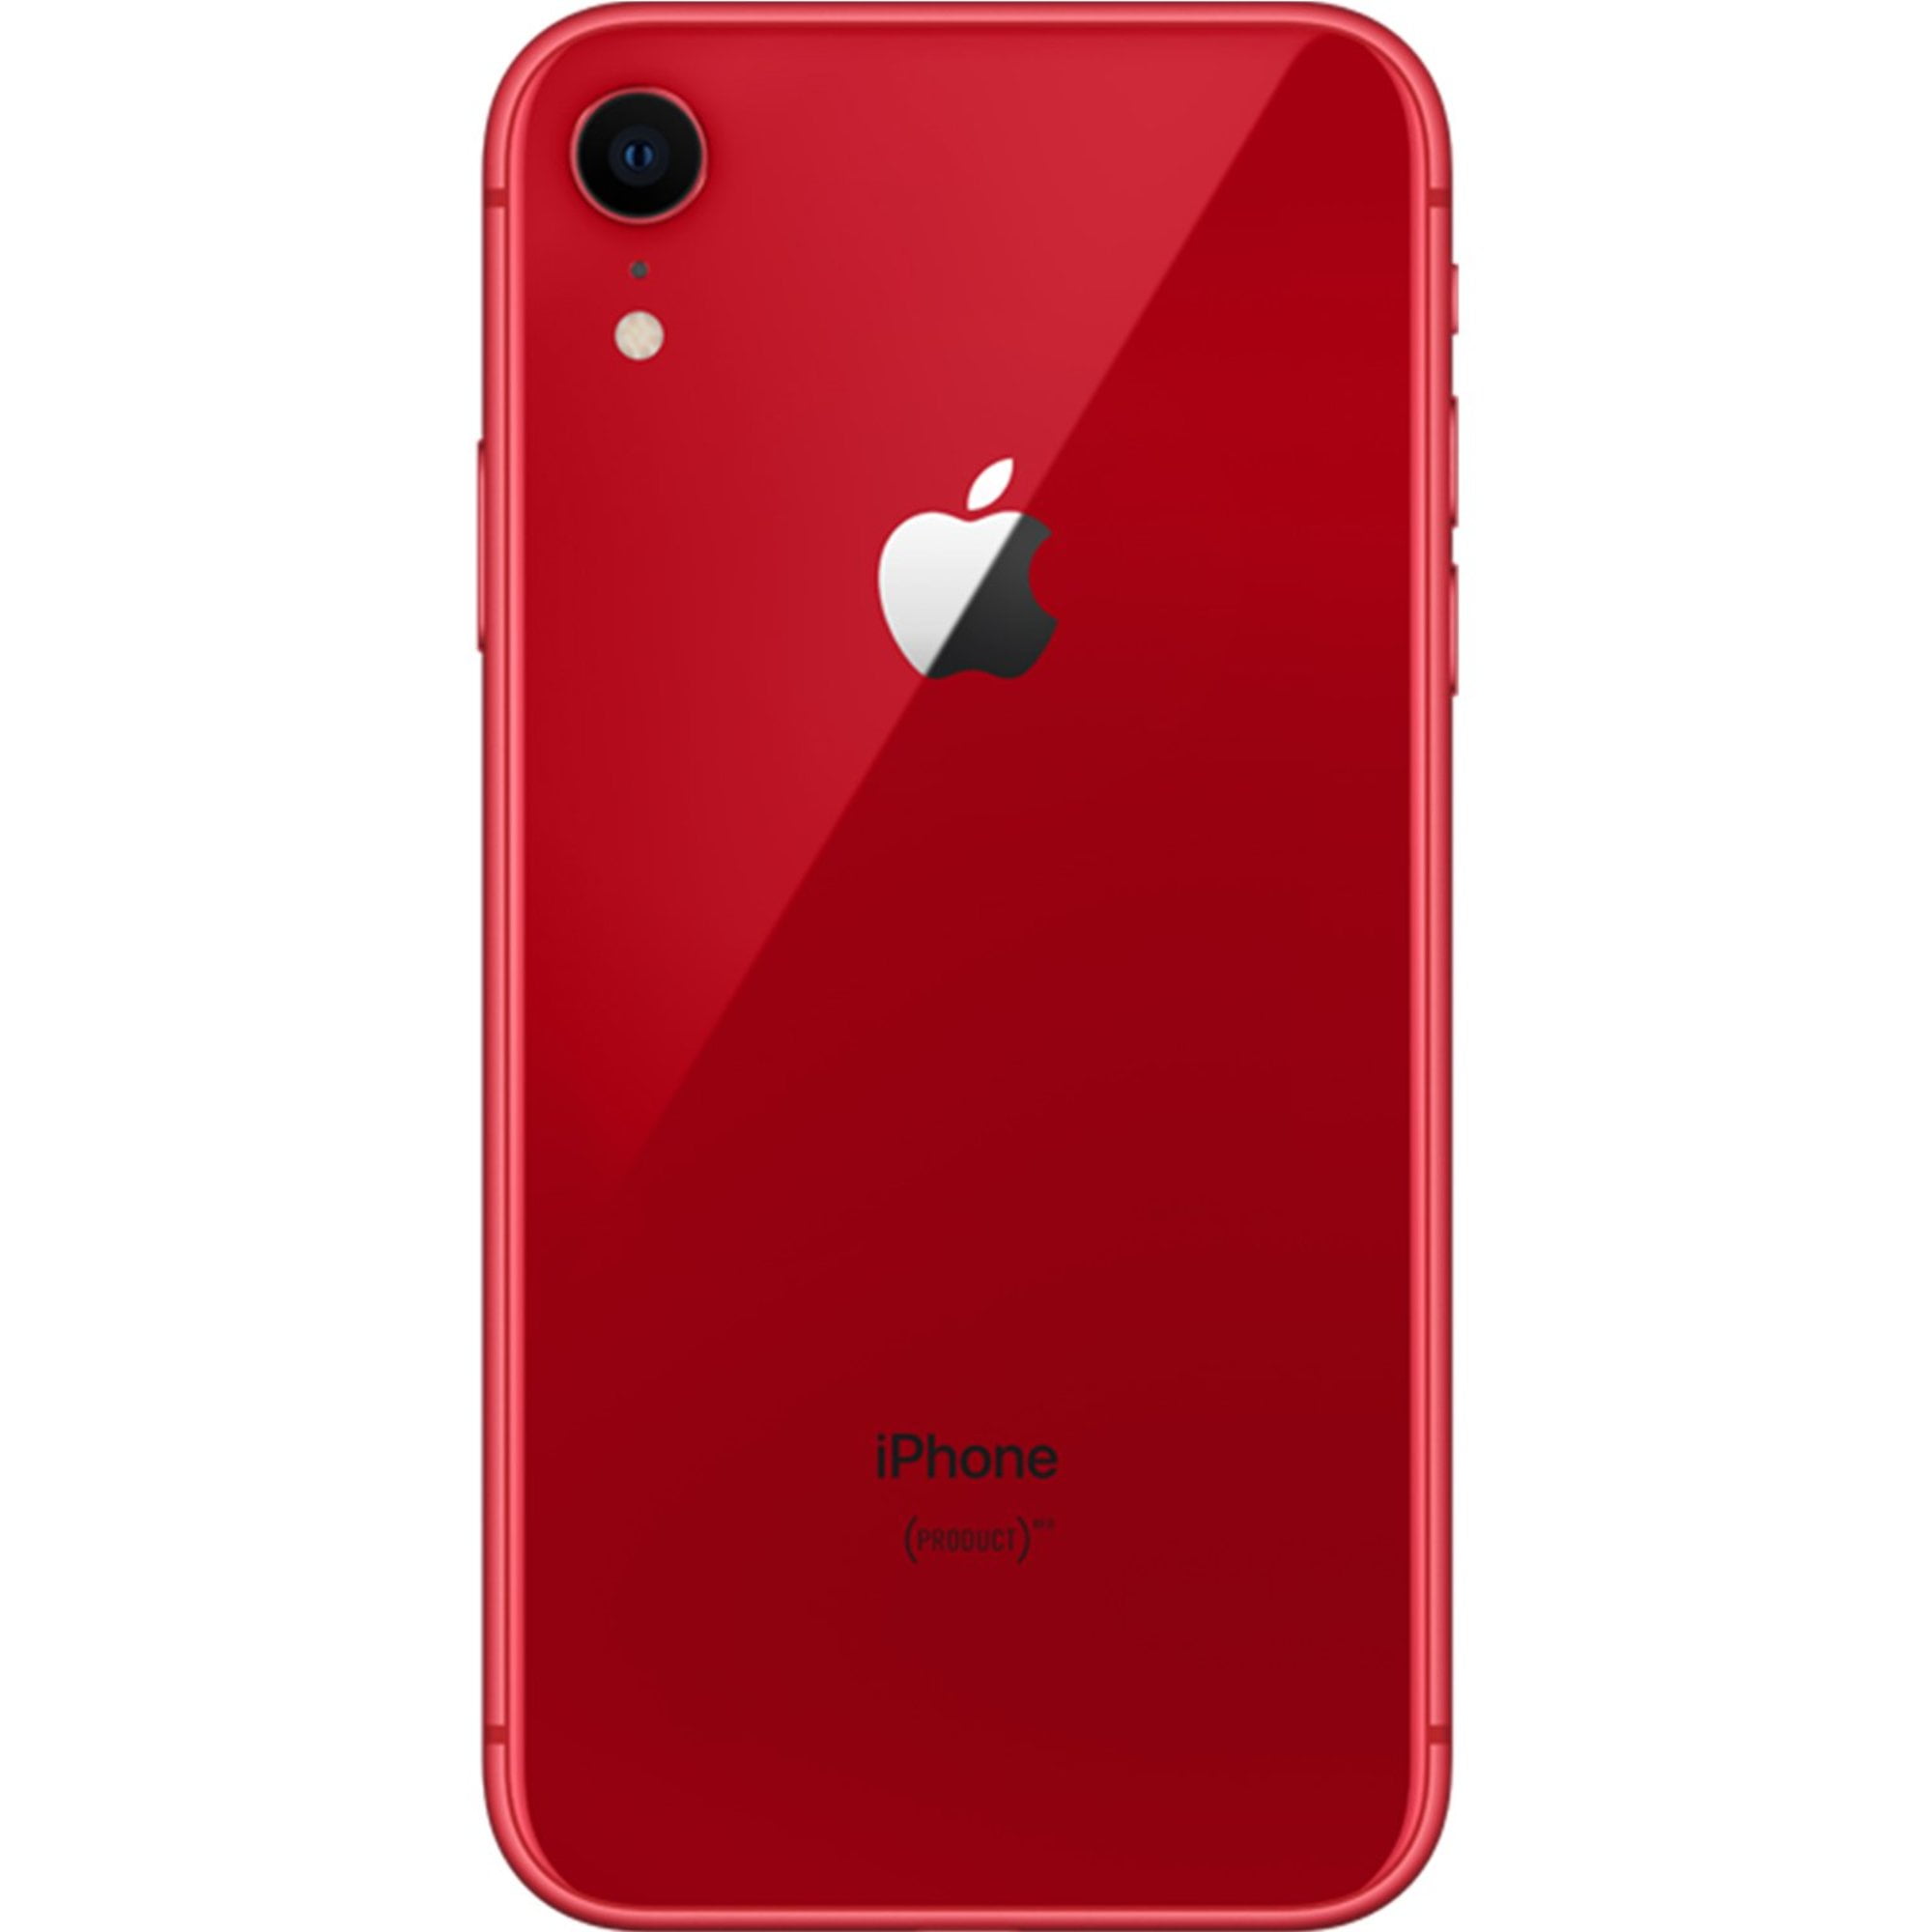 Apple iPhone XR 64GB Fully Unlocked (Verizon + Sprint + GSM Unlocked) - Red  (Used)